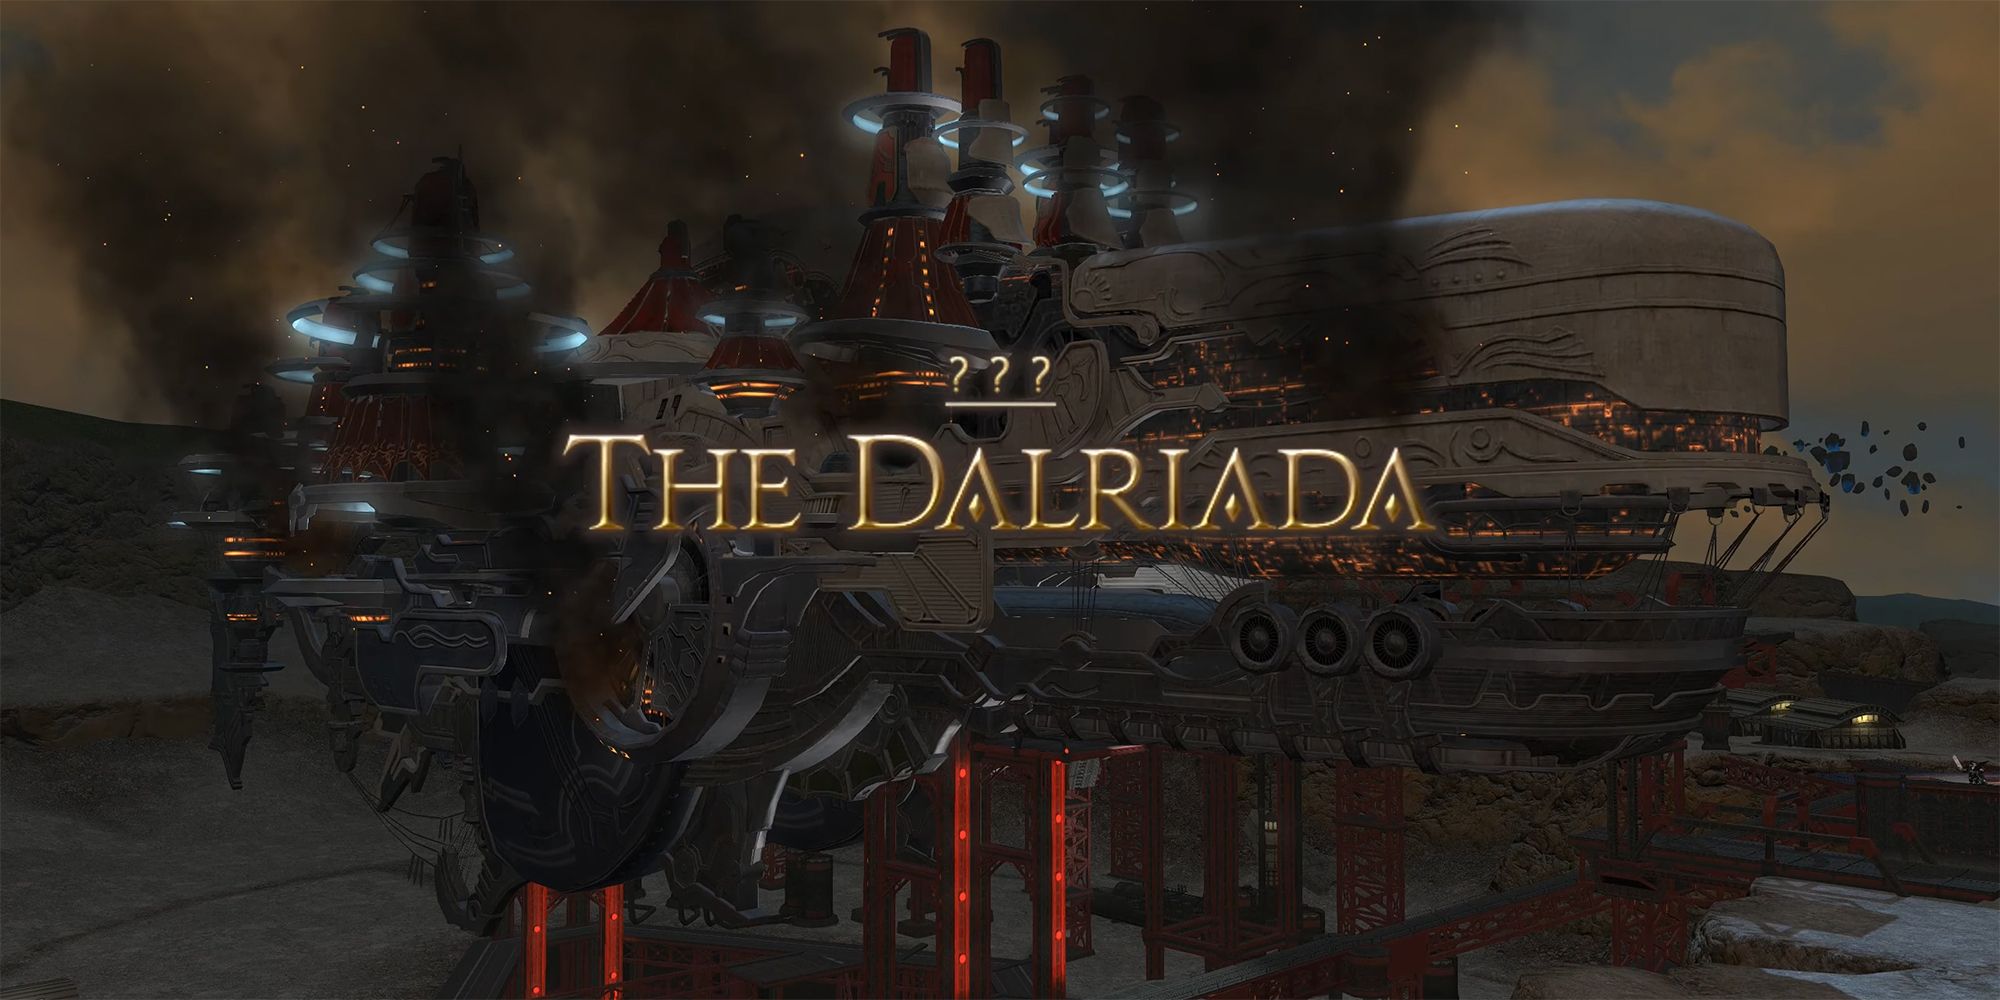 the dalriada raid title intro